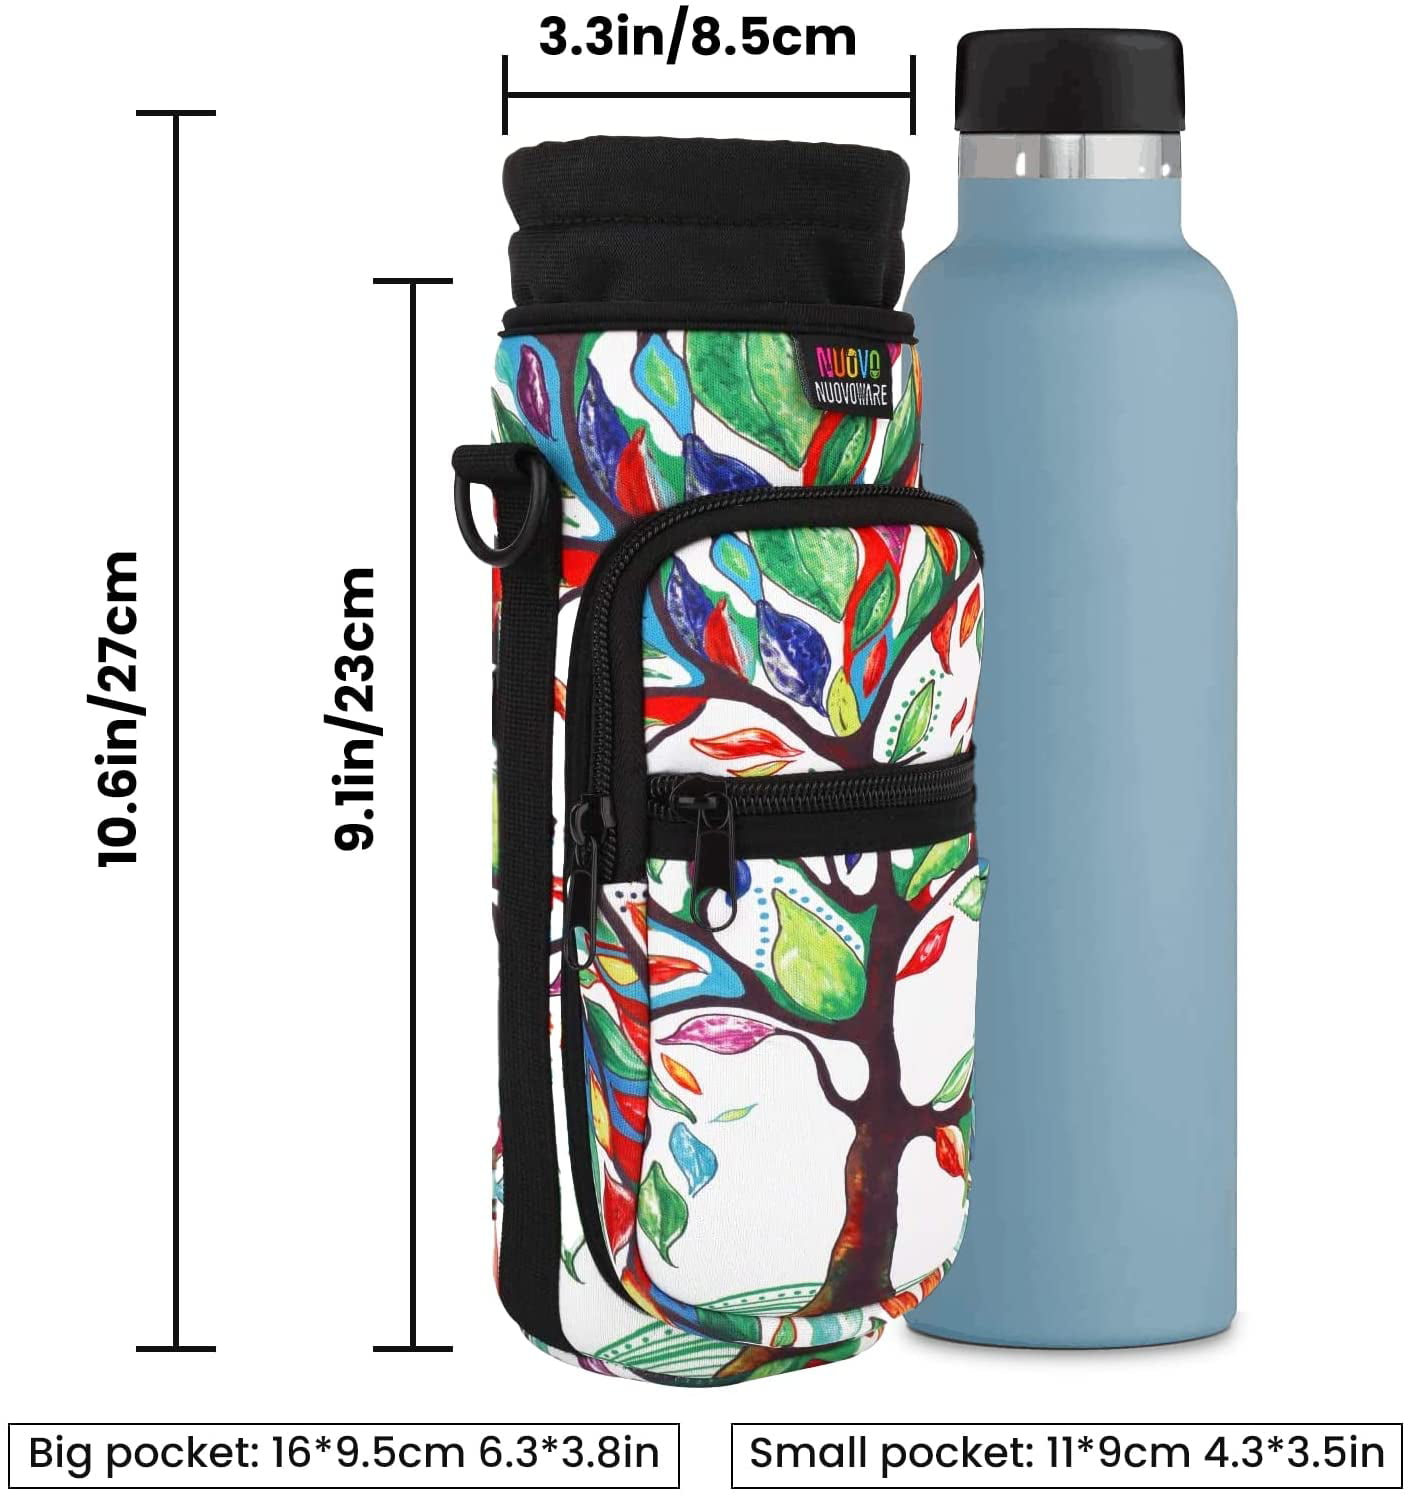 Nuovoware Water Bottle Carrier Bag, Bottle Pouch Holder